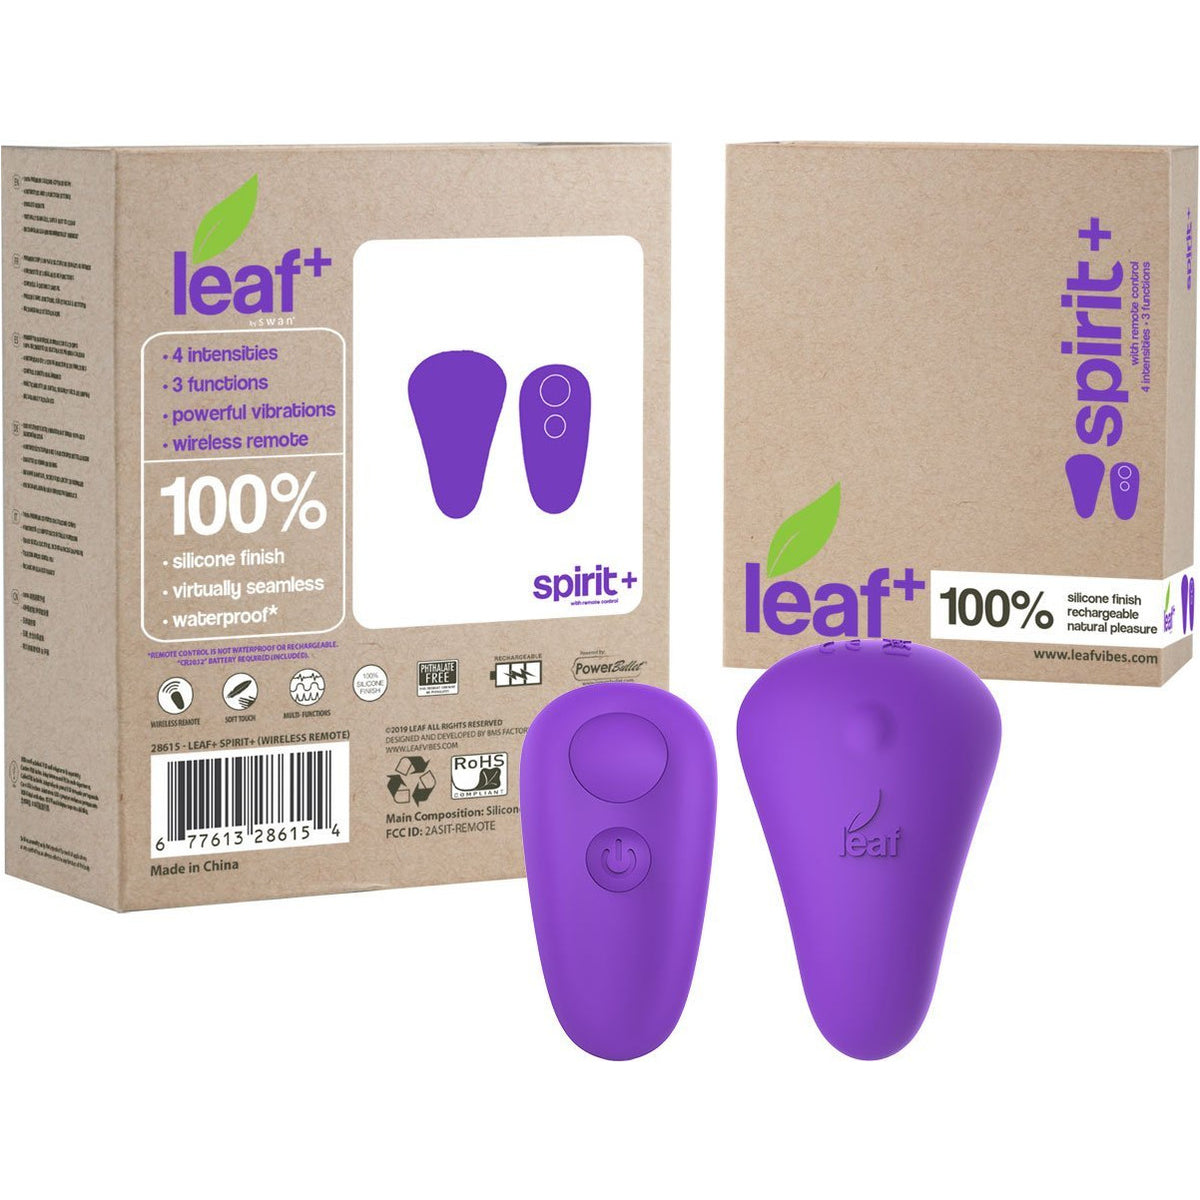 Swan Leaf+ - Spirit+ Vibrator with Remote Control - Purple